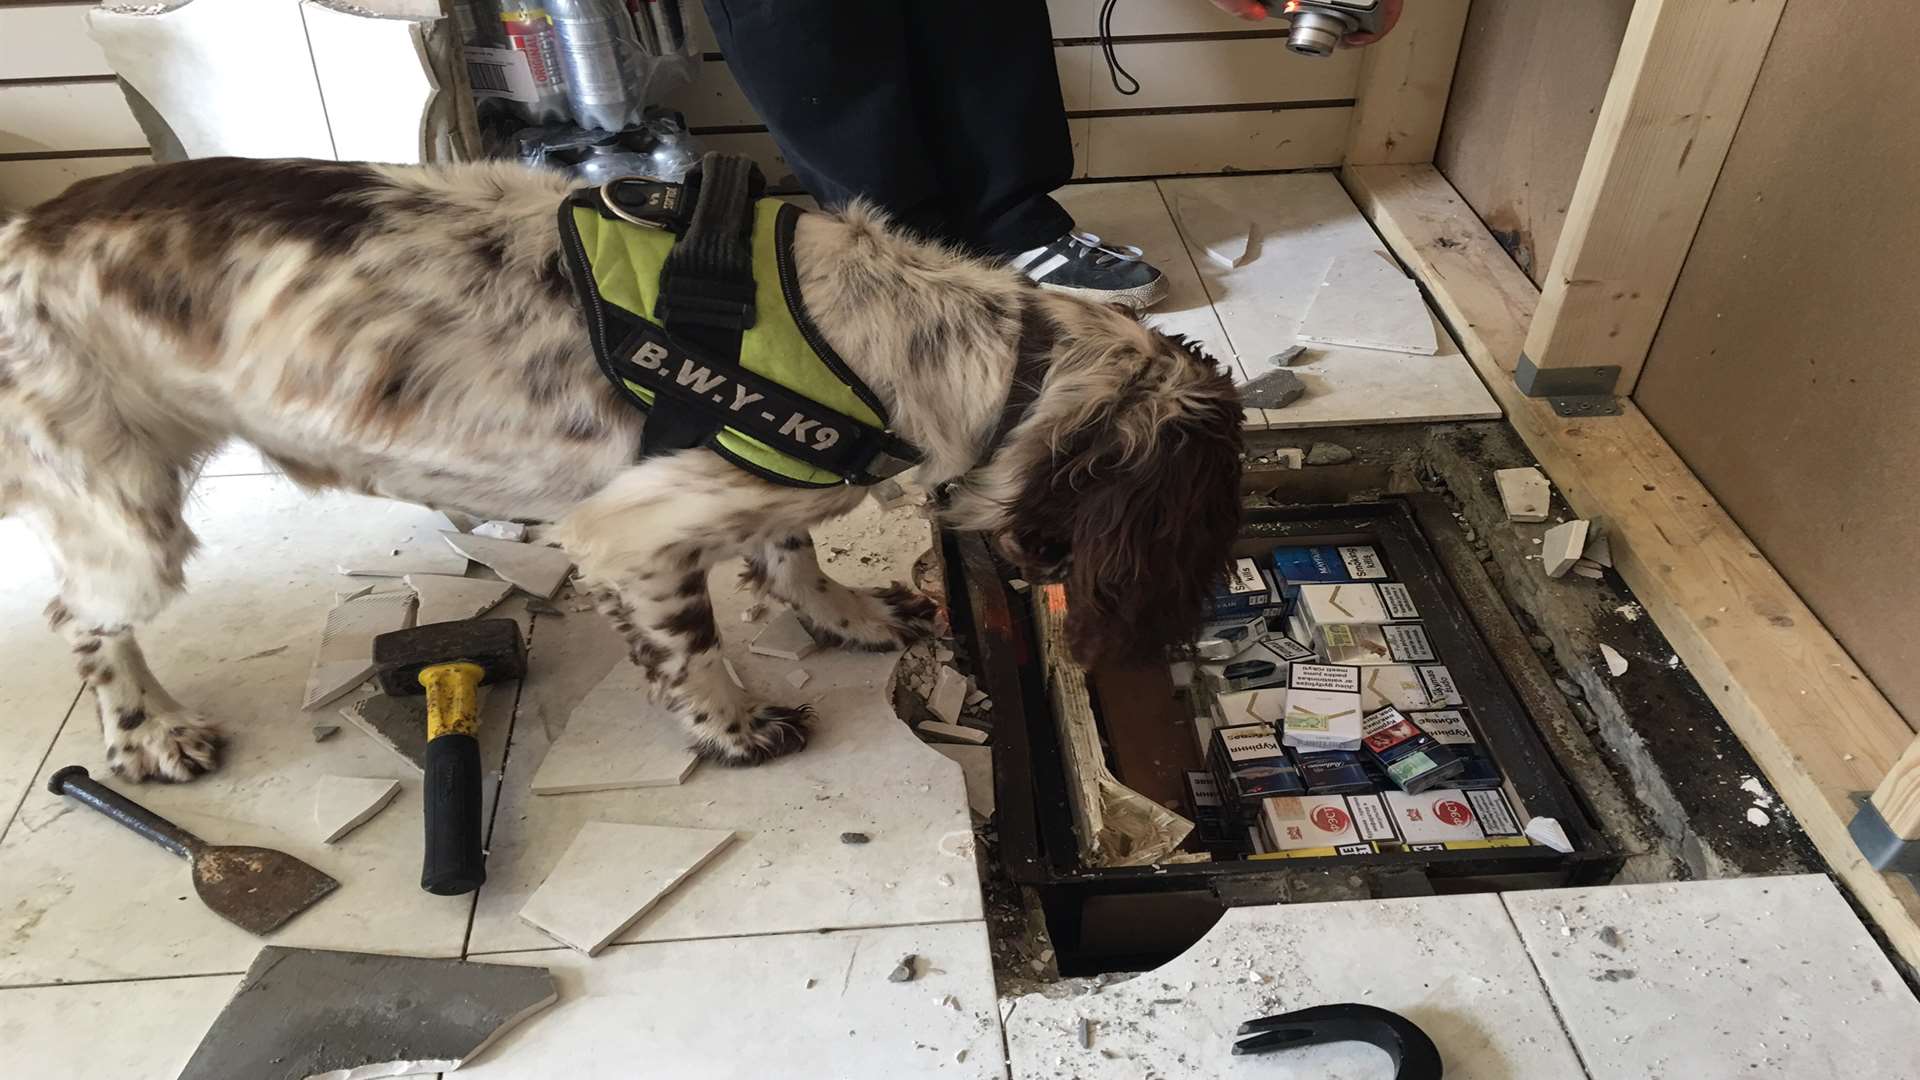 Sniffer dogs found the secret stash below the floor